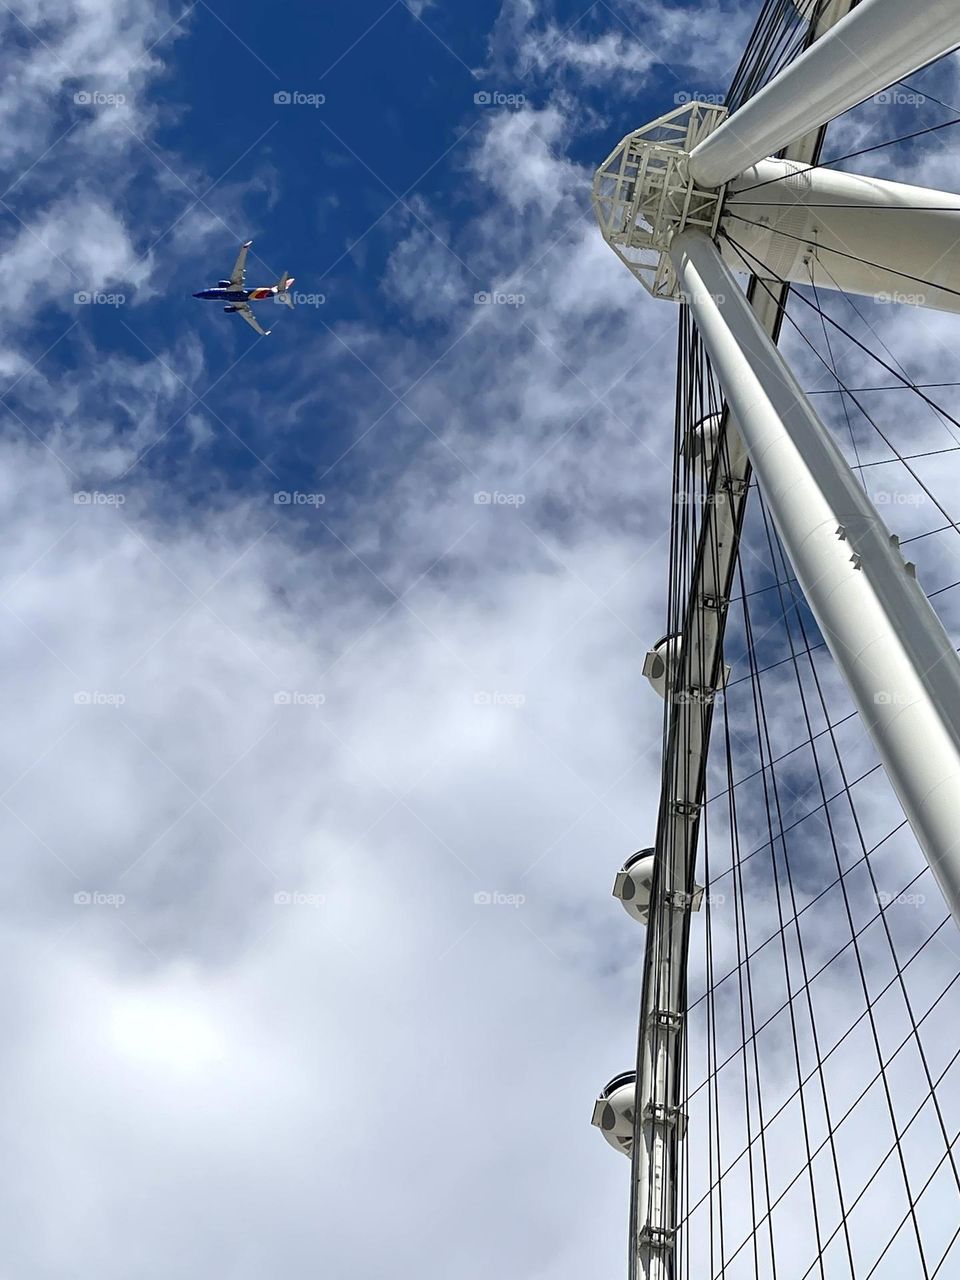 Plane flying near Ferris wheel